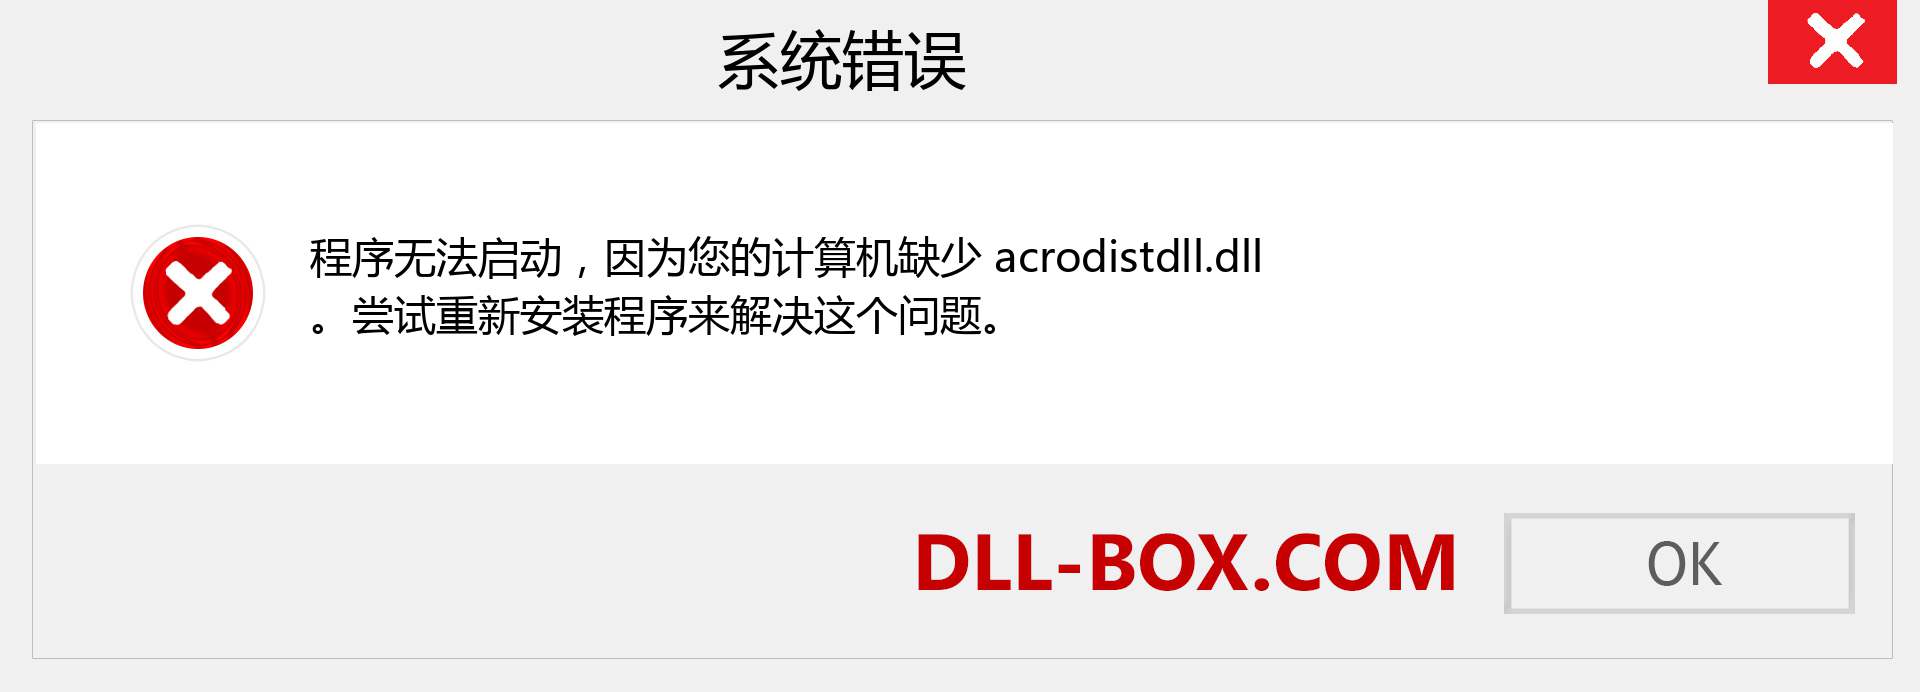 acrodistdll.dll 文件丢失？。 适用于 Windows 7、8、10 的下载 - 修复 Windows、照片、图像上的 acrodistdll dll 丢失错误